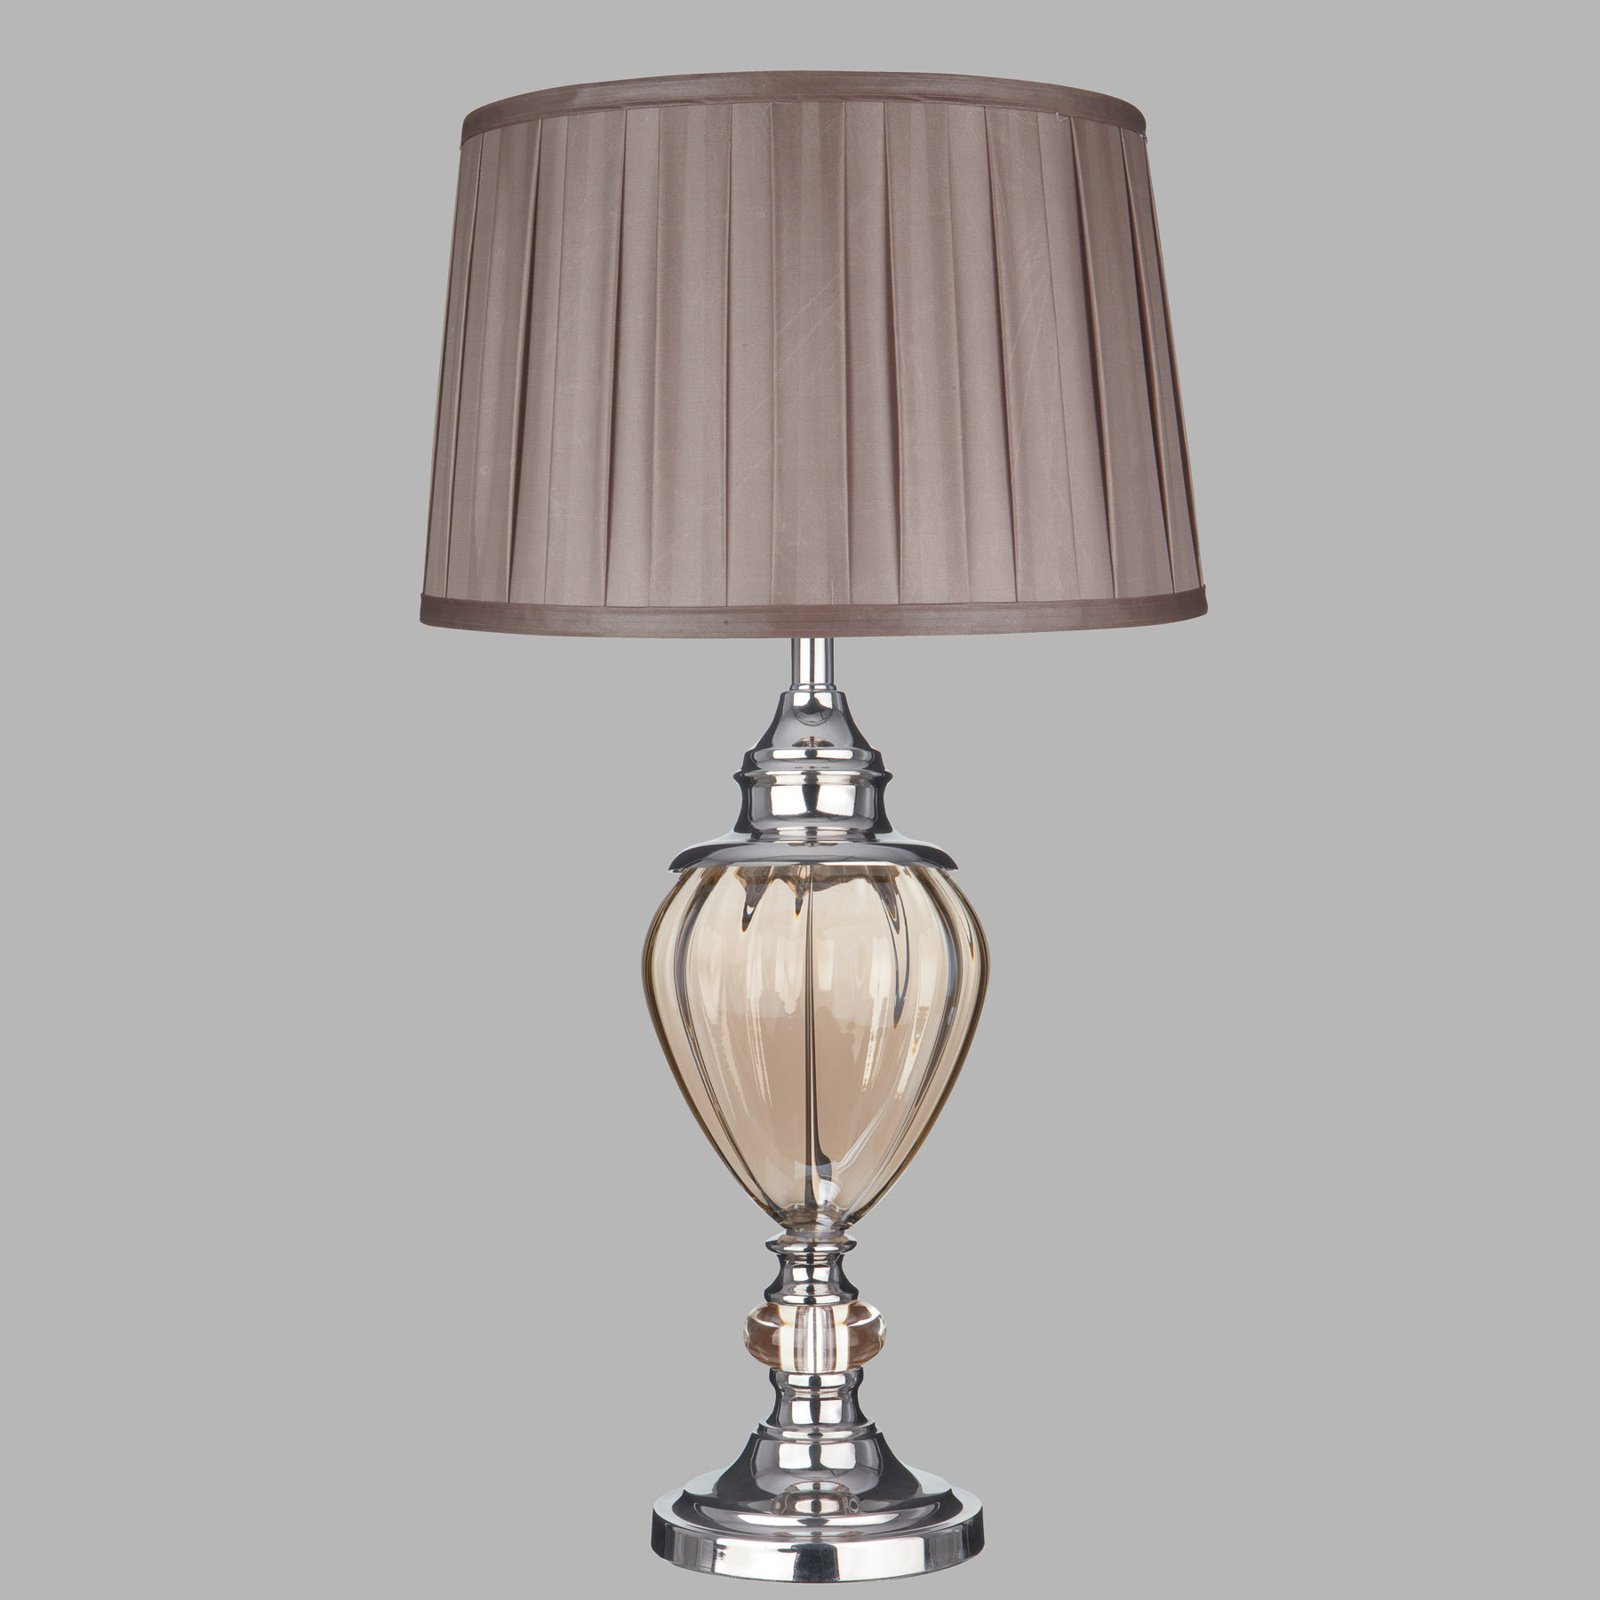 Lámpara de mesa Greyson, pantalla textil en marrón